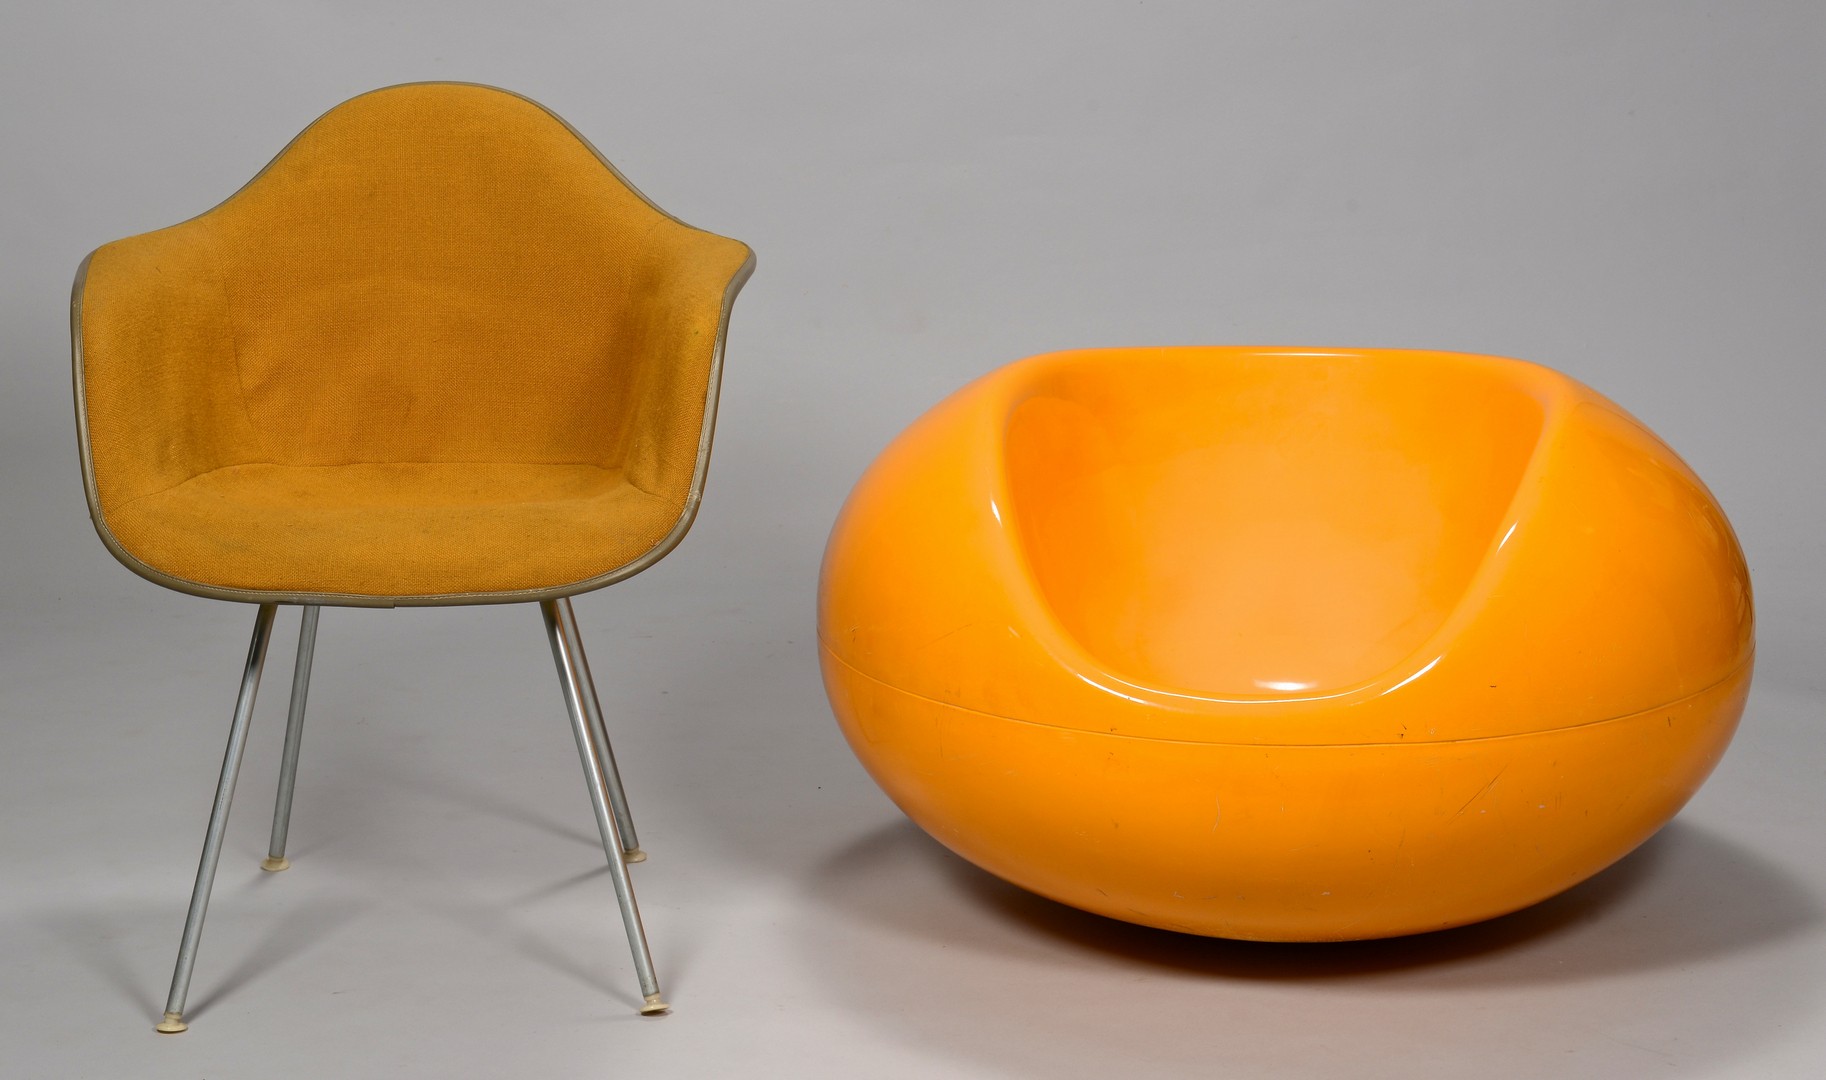 Lot 310: 2 Mid-Century Modern Chairs